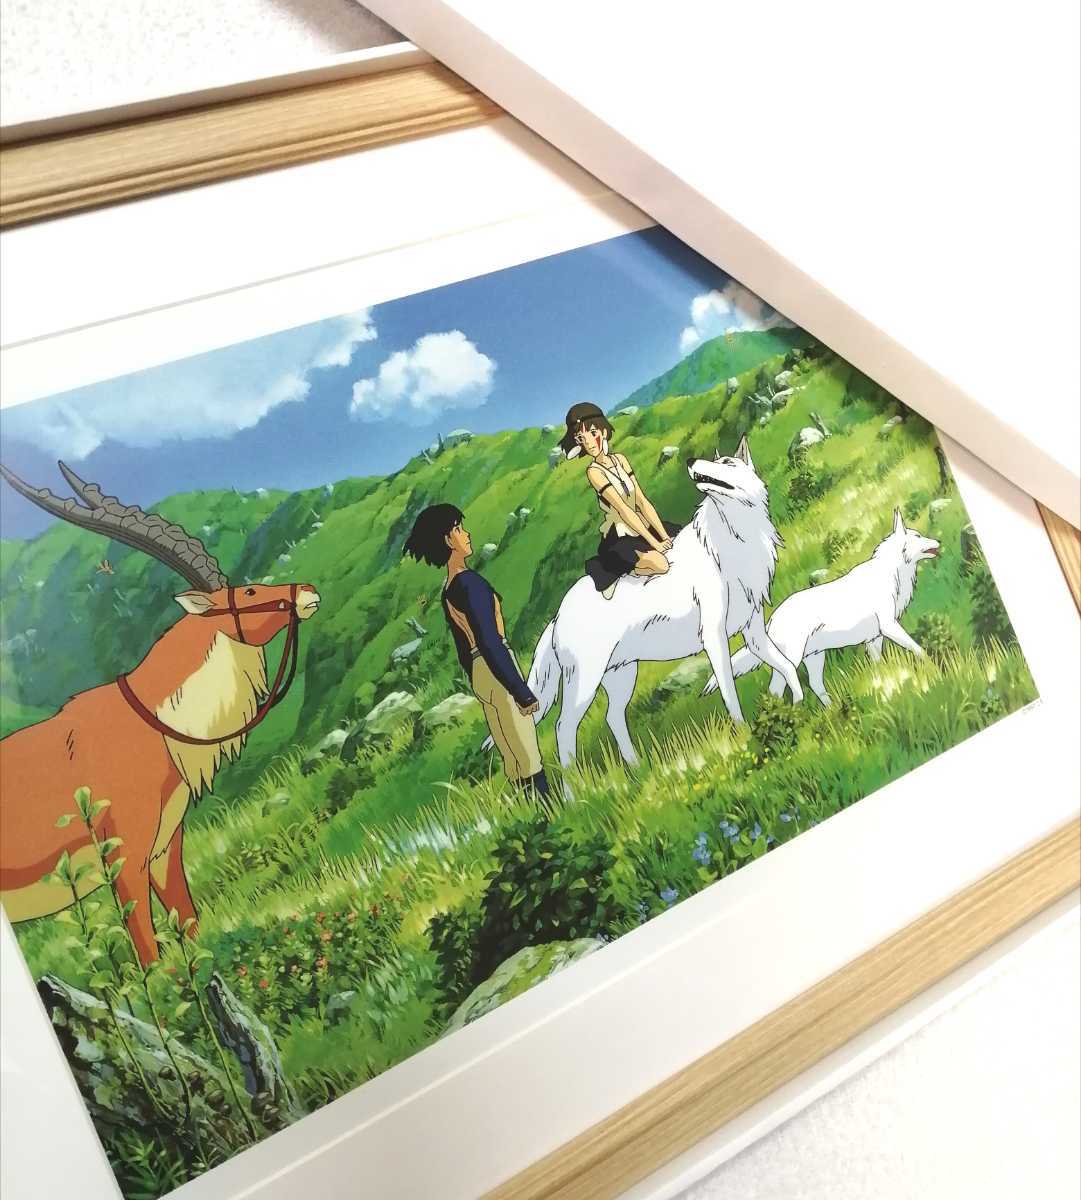 Sehr selten! Studio Ghibli Prinzessin Mononoke [Gerahmter Artikel] Ghibli-Poster (Inspektion) Ghibli-Gemälde Original-Reproduktionspostkarte Ghibli-Kalender. Hayao Miyazaki a, Ma-Linie, Prinzessin Mononoke, Andere